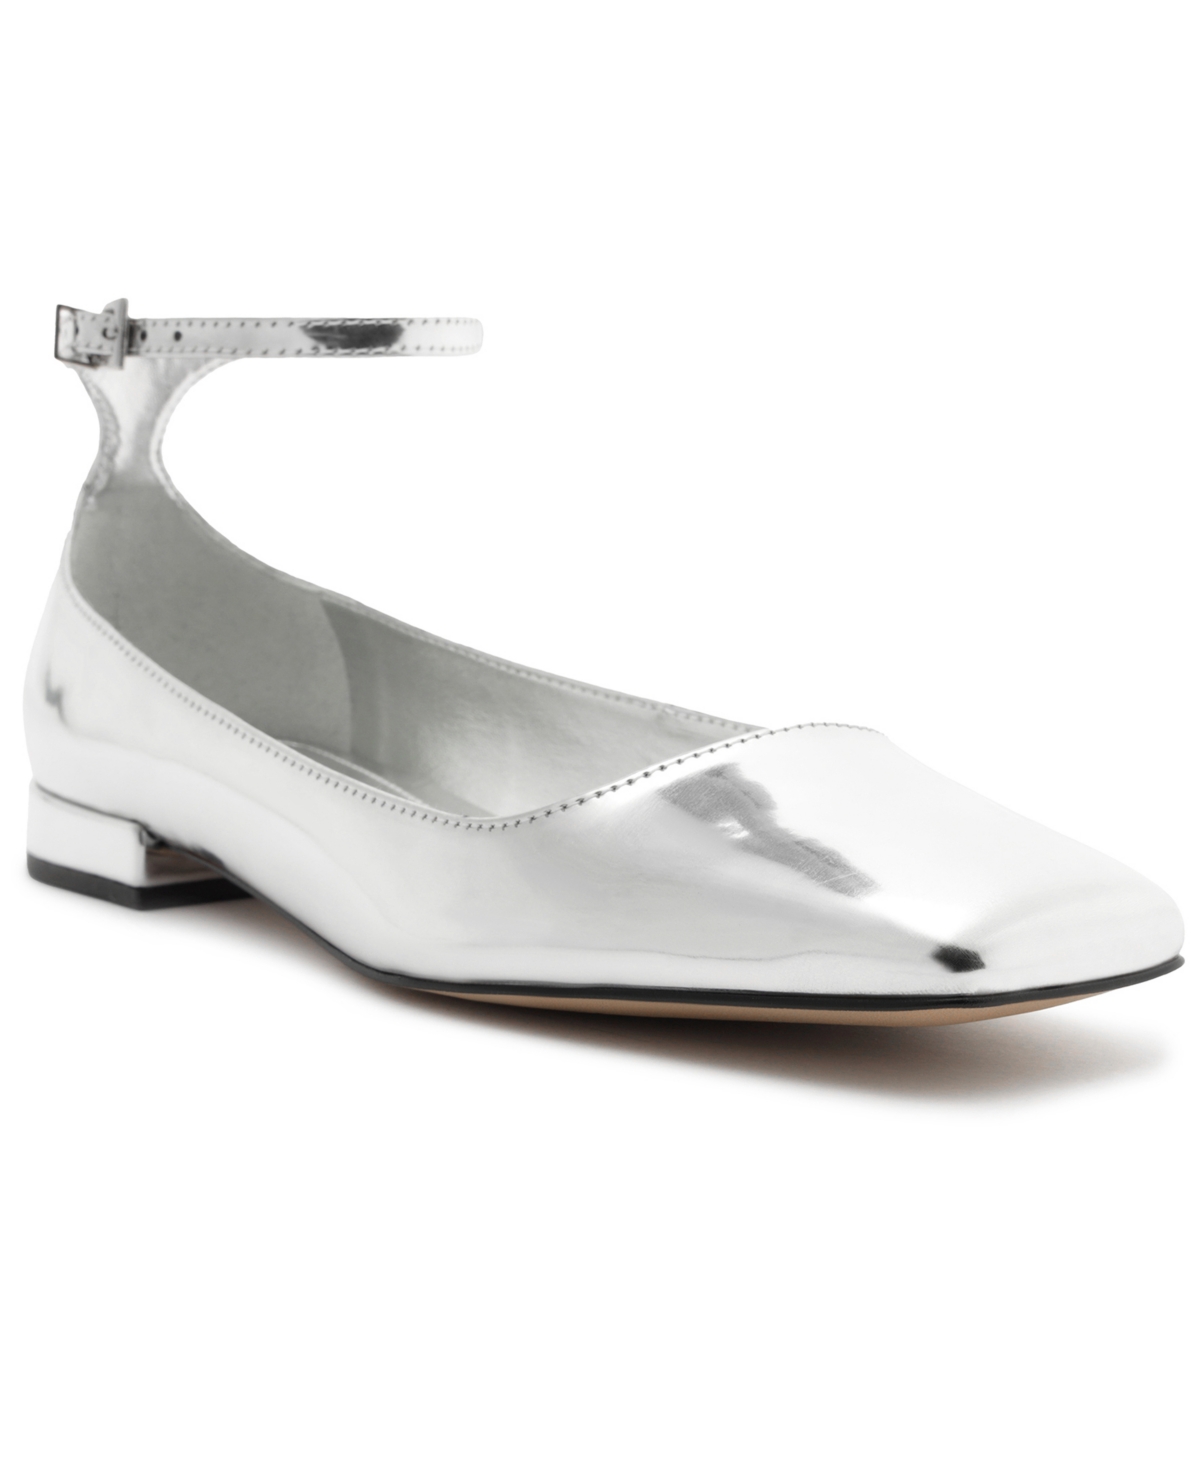 Women's Aubrey Square Toe Ballet Flats - Silver